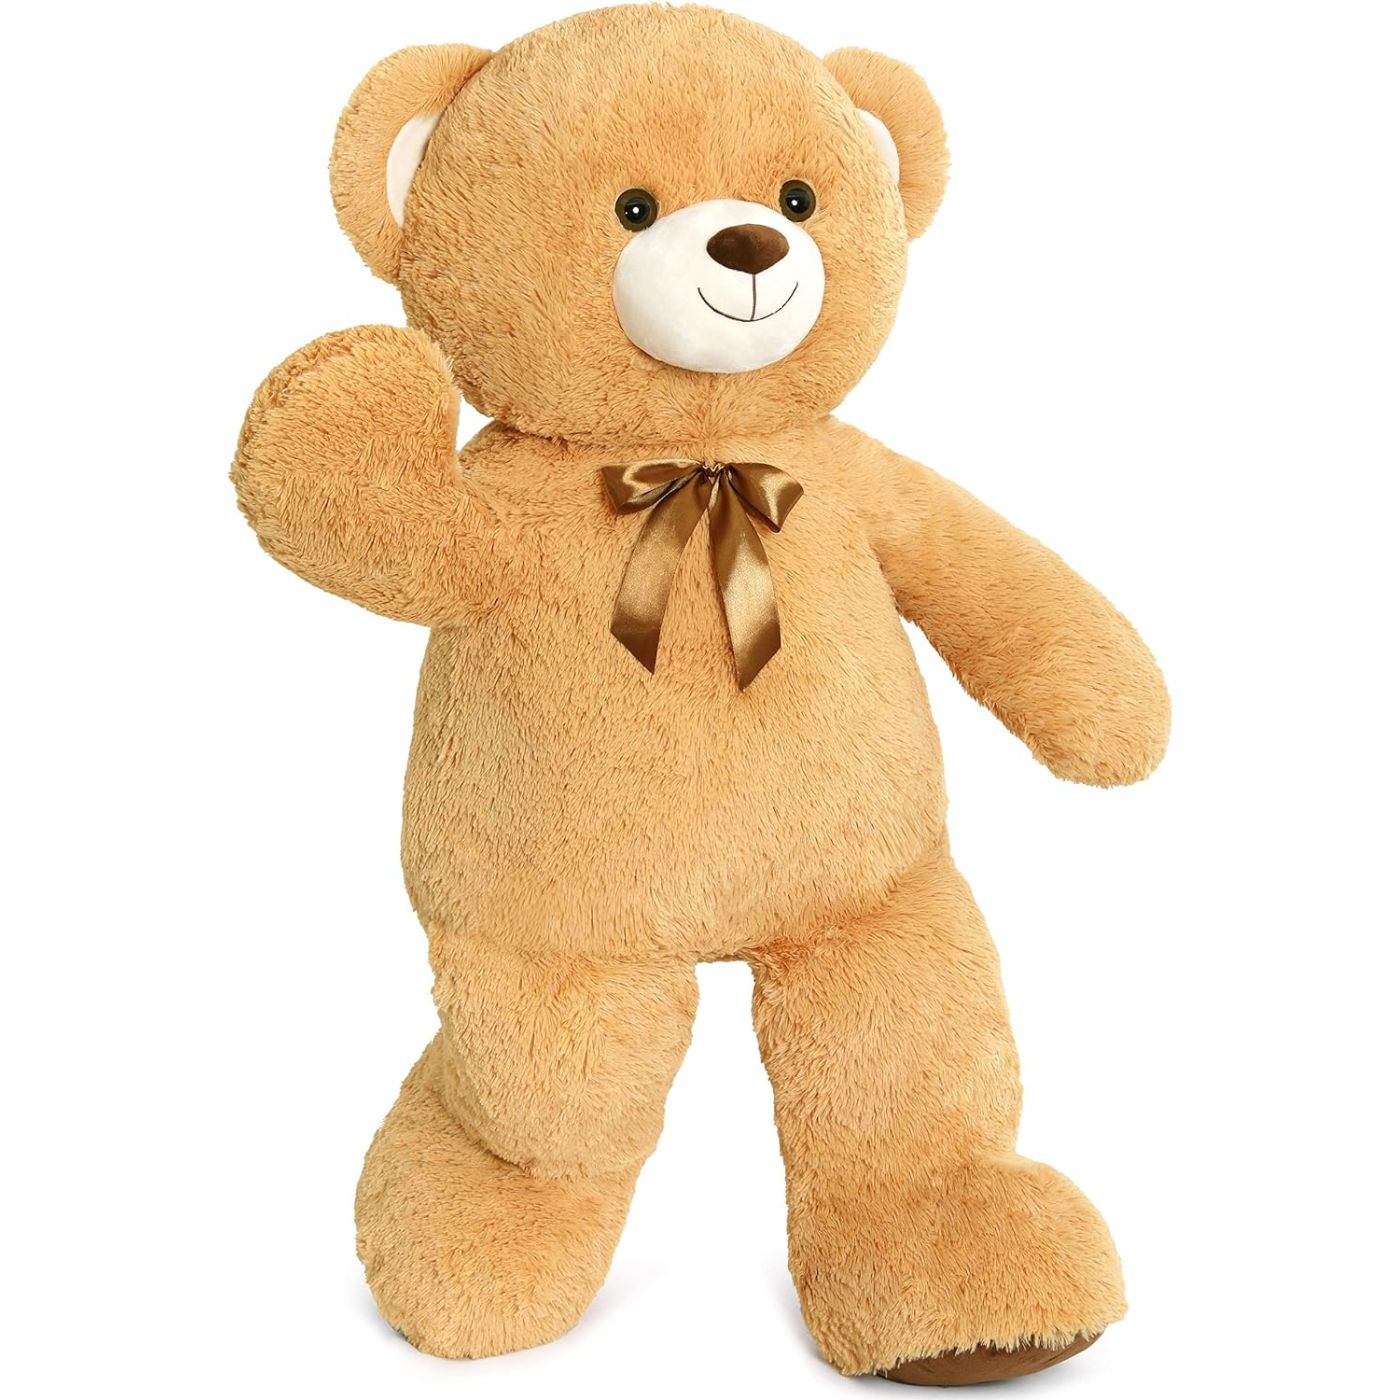 Riesiges Teddybär-Stofftier, mehrfarbig, 41 Zoll